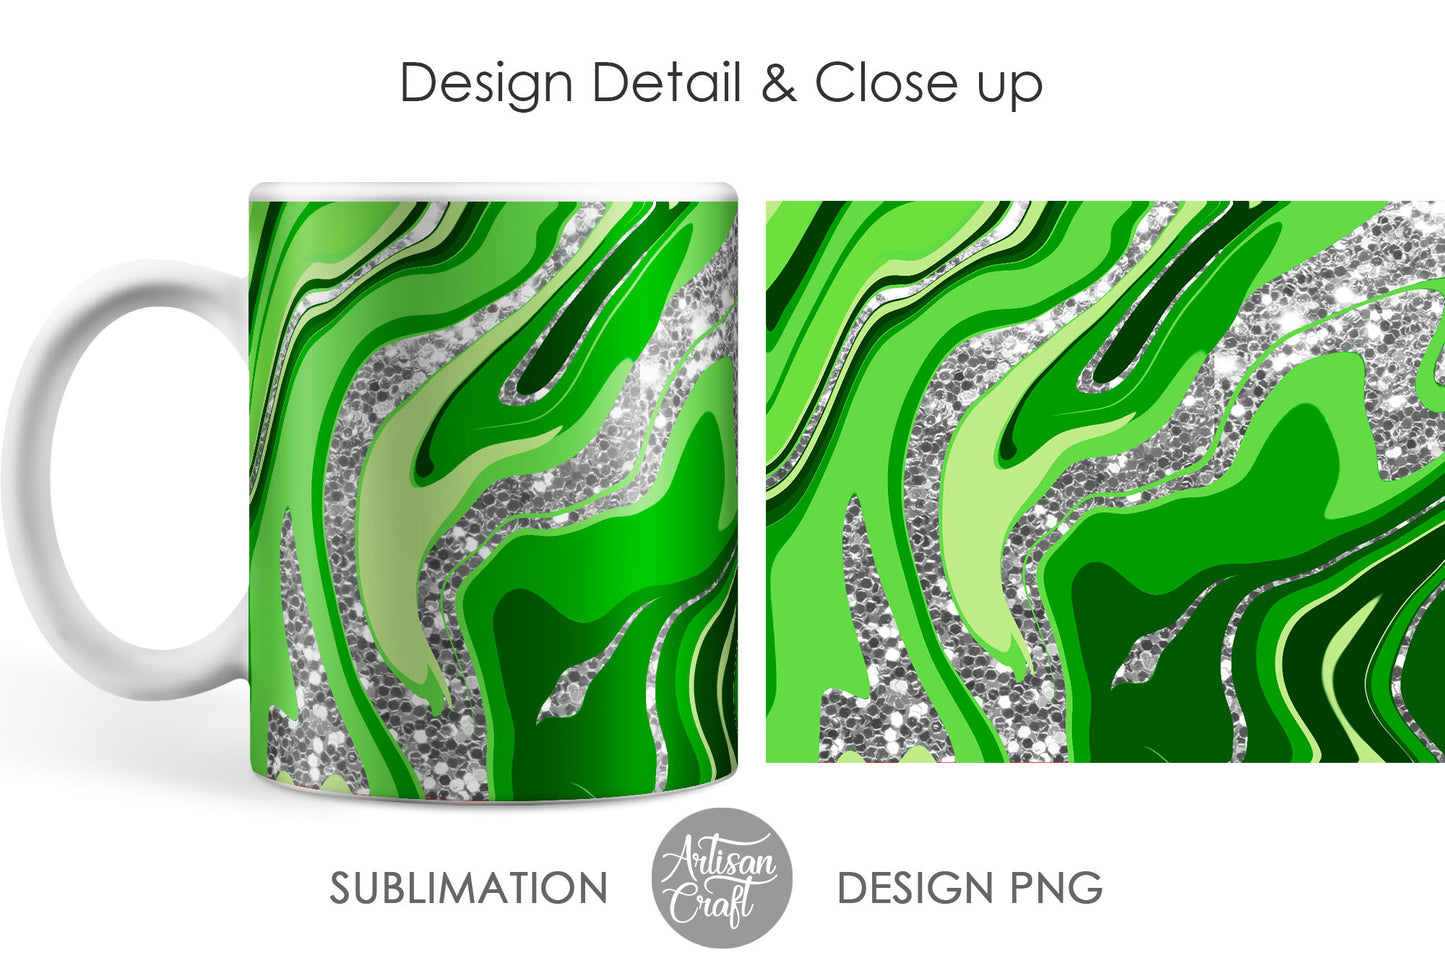 11 oz mug sublimation design with fluid art